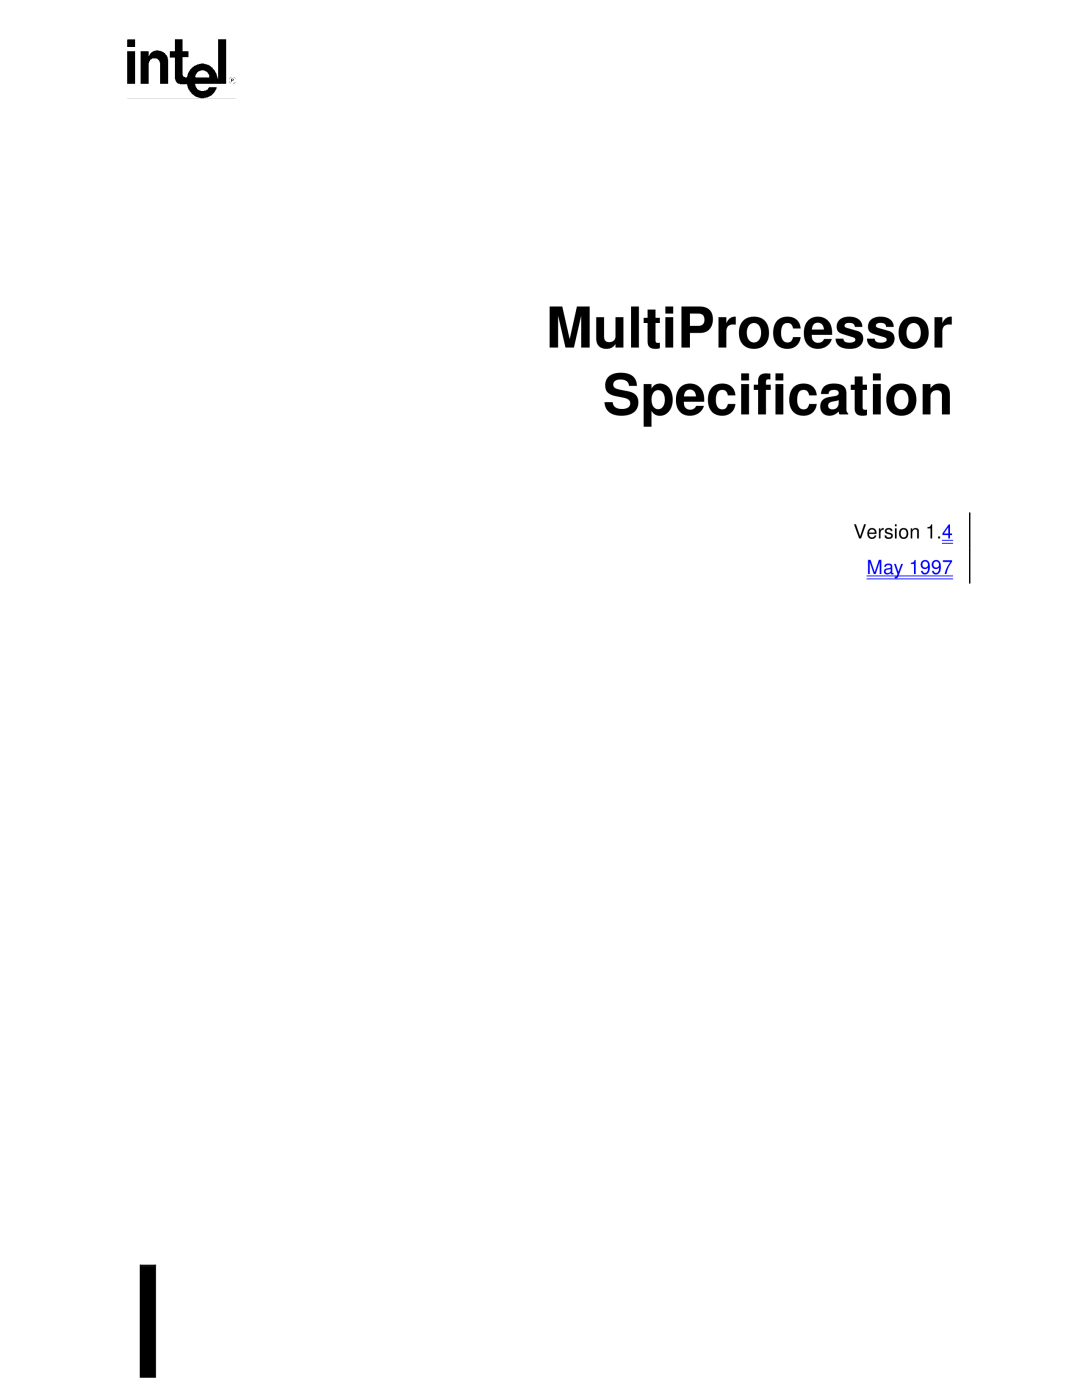 Intel manual MultiProcessor Specification, Version 